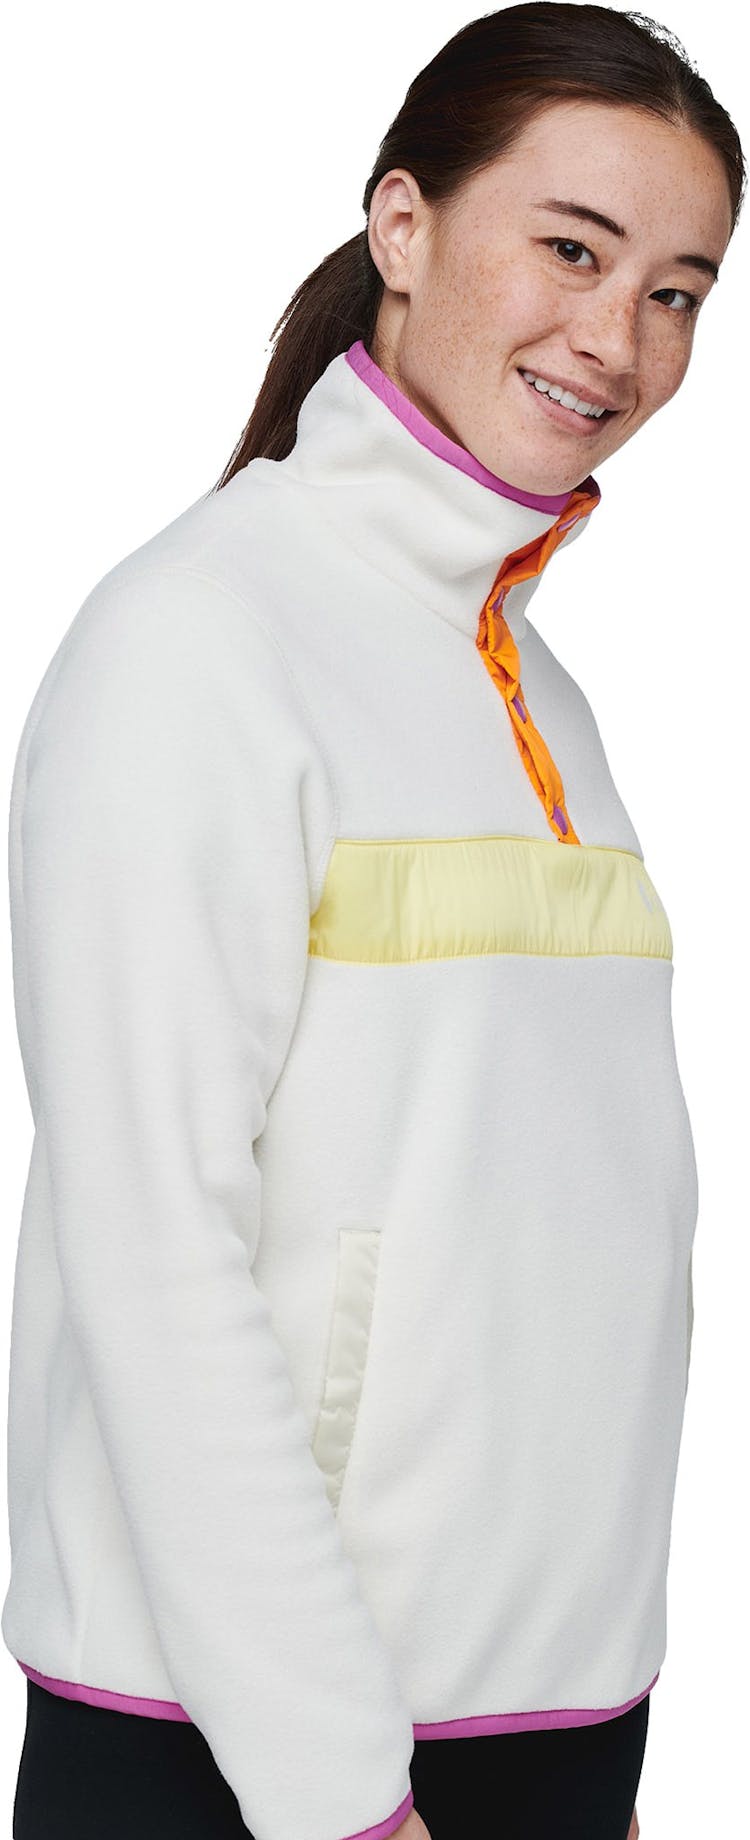 Product gallery image number 13 for product Teca 1/4 Snap Fleece Sweatshirt - Women's